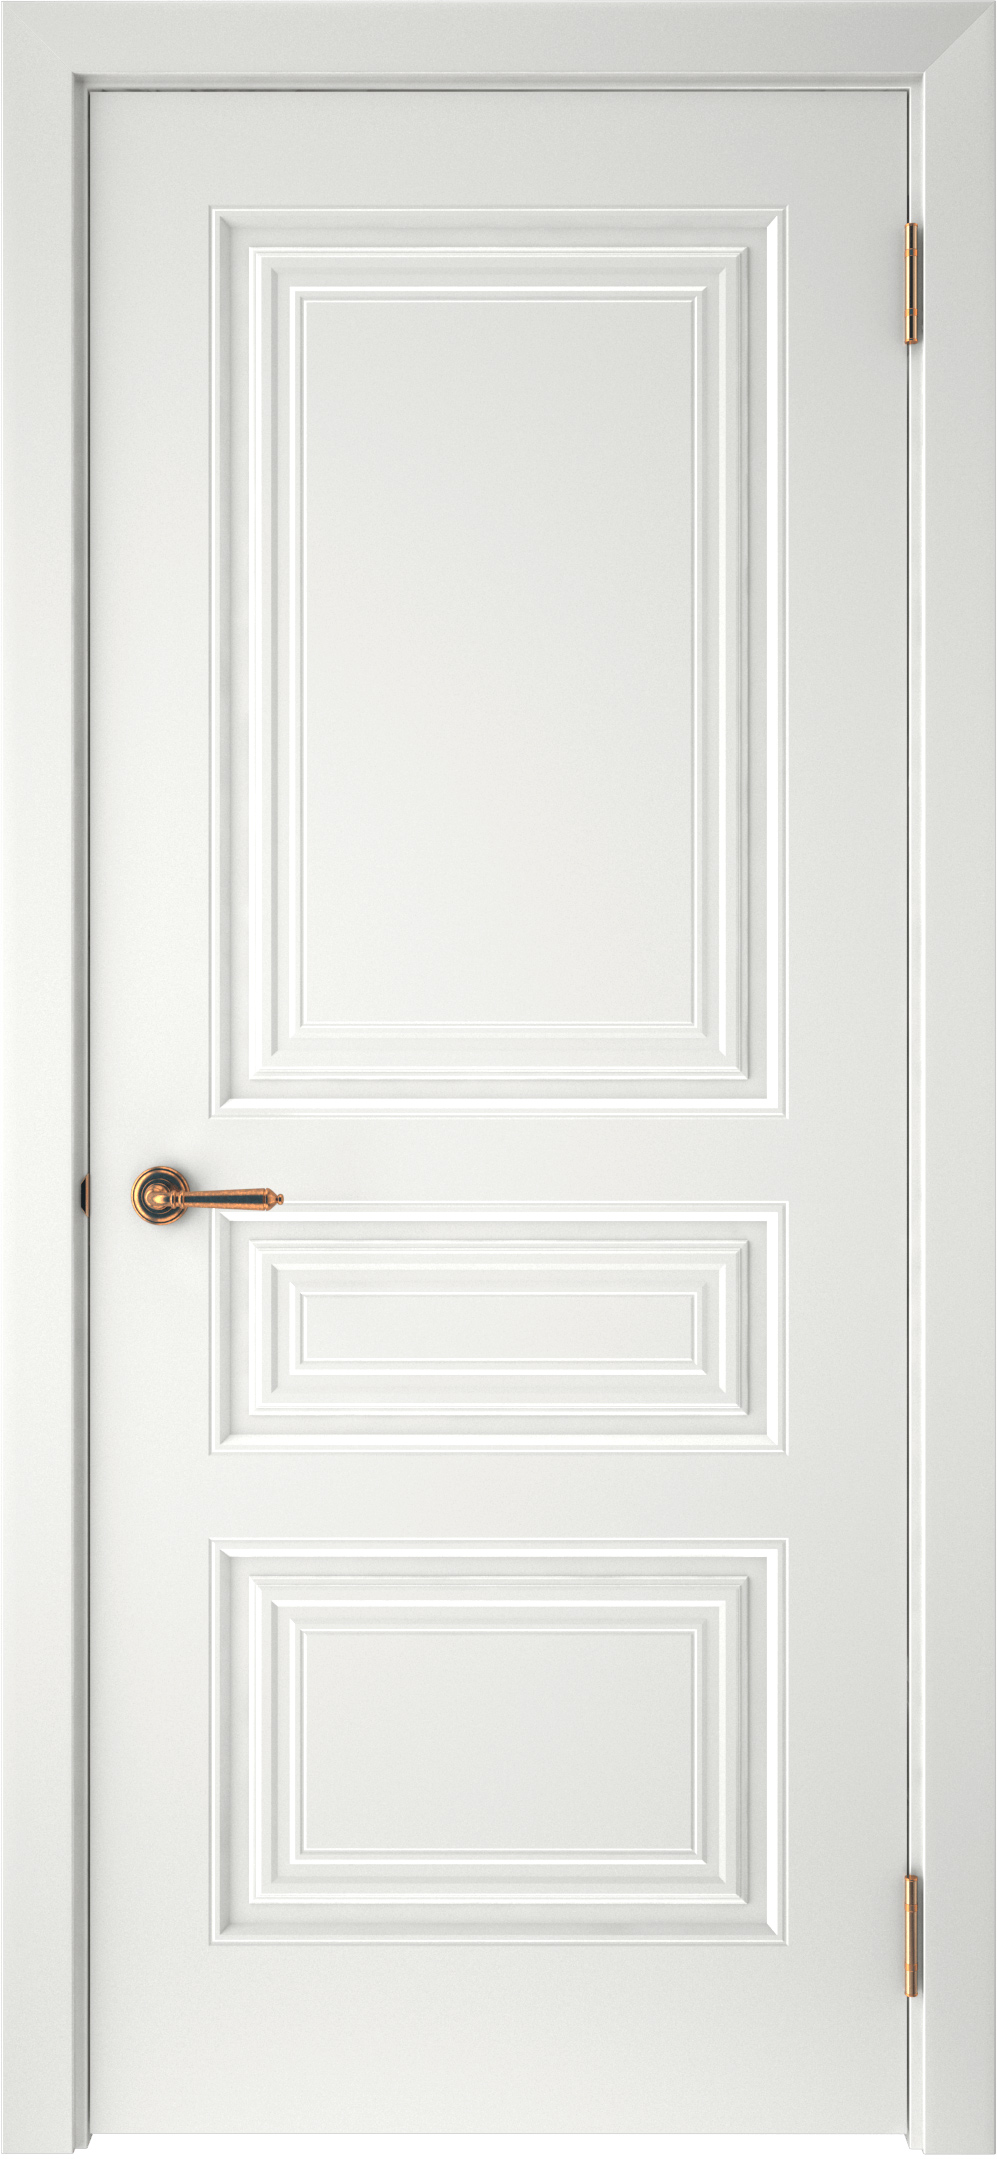 Двери крашеные (Эмаль) ТЕКОНА Смальта-44 глухое Белый ral размер 200 х 60 см. артикул F0000092482